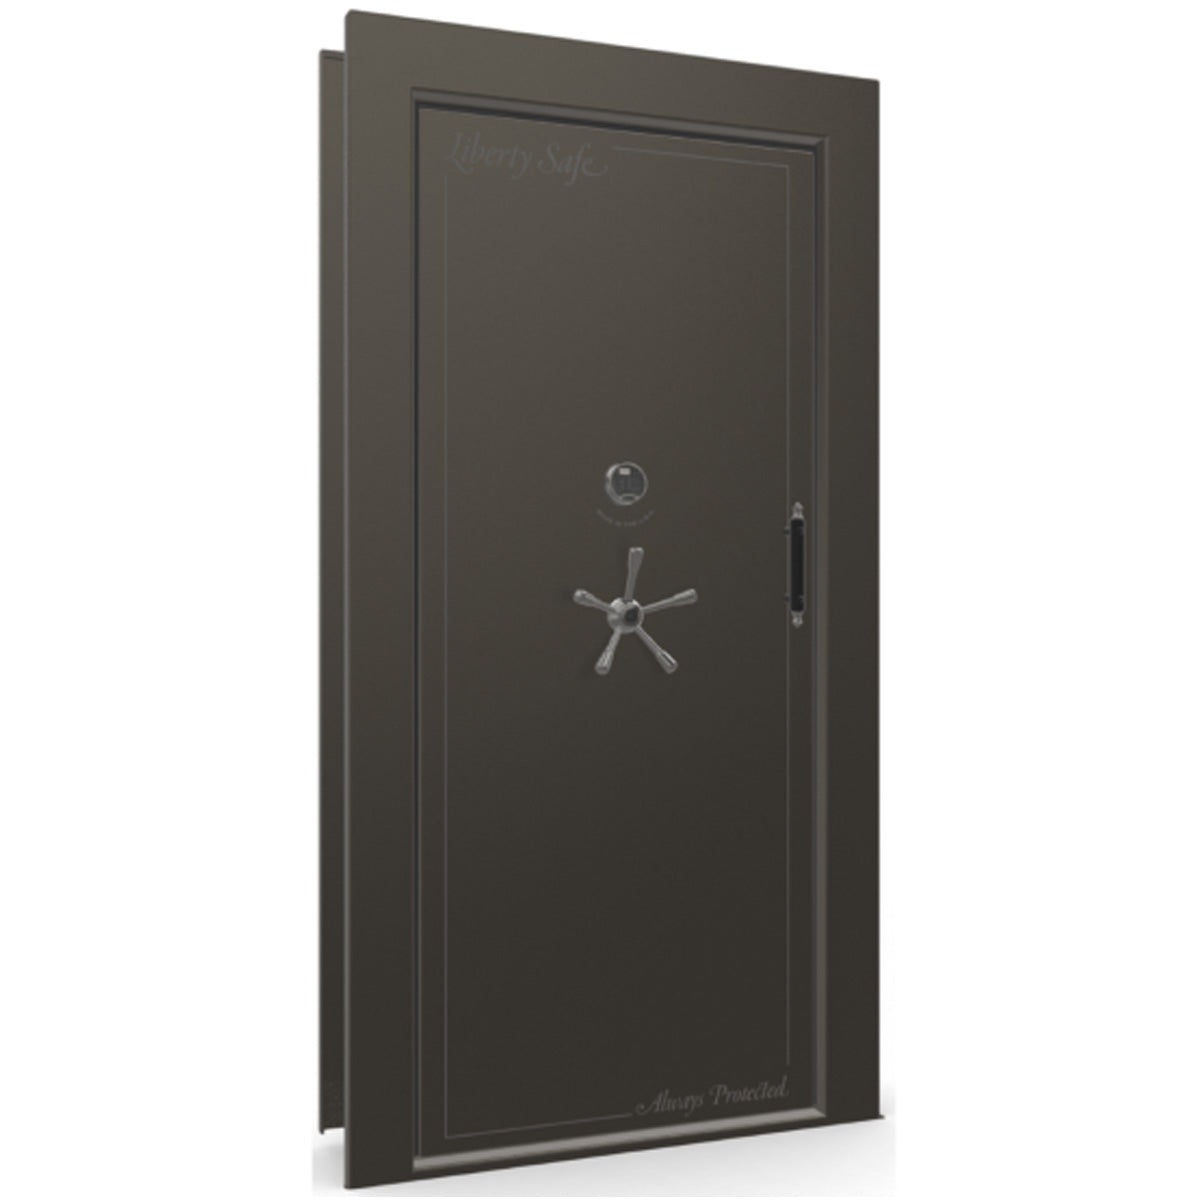 The Beast Vault Door in Gray Marble with Black Chrome Electronic Lock, Left Inswing, door closed.